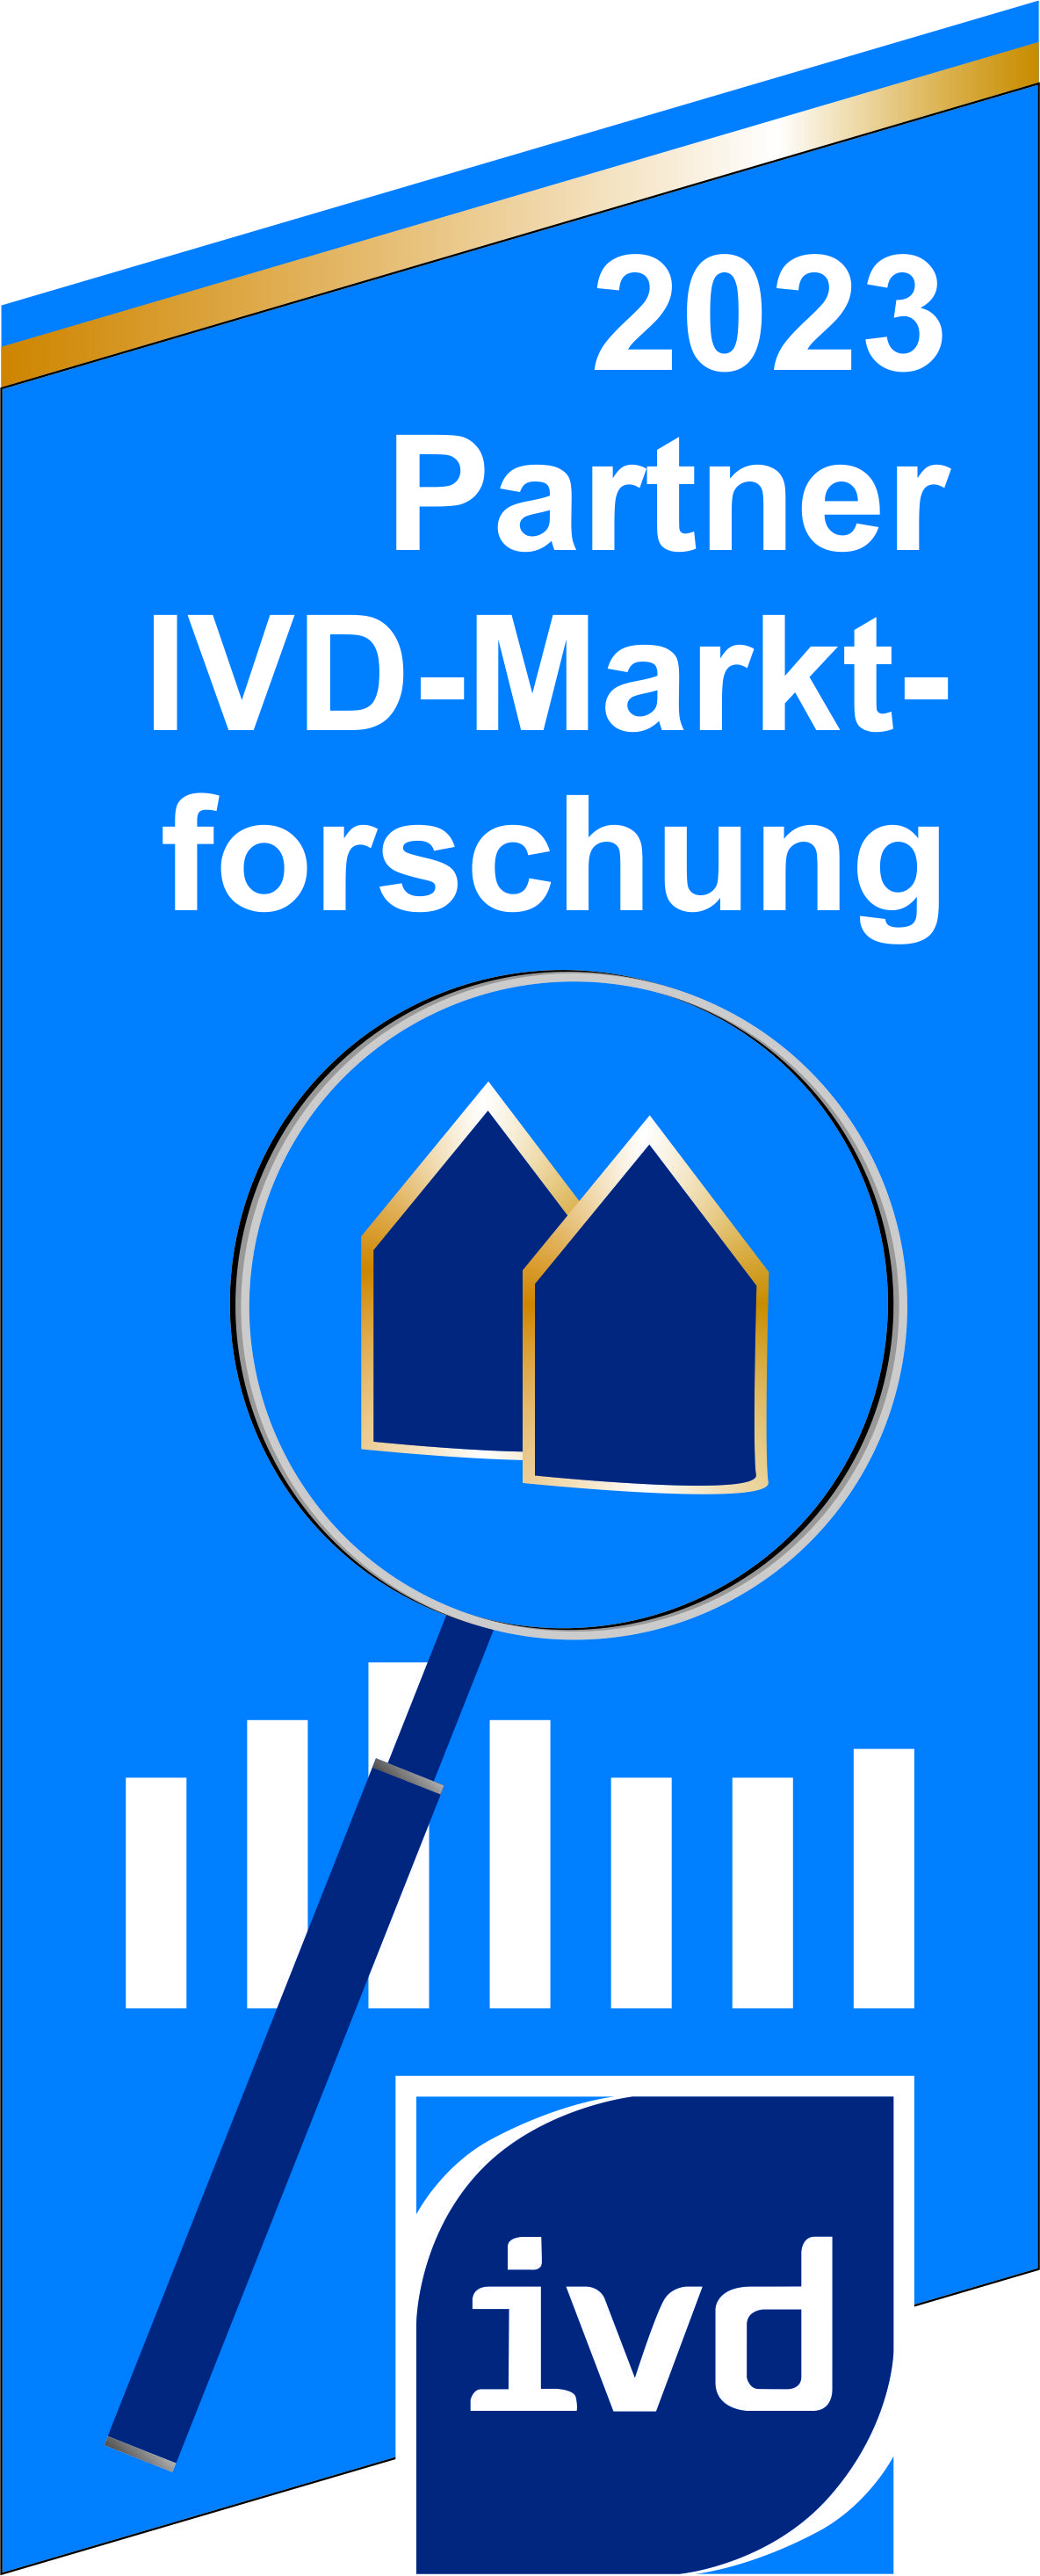 Immobiliensuche nahe Vilshofen & Osterhofen